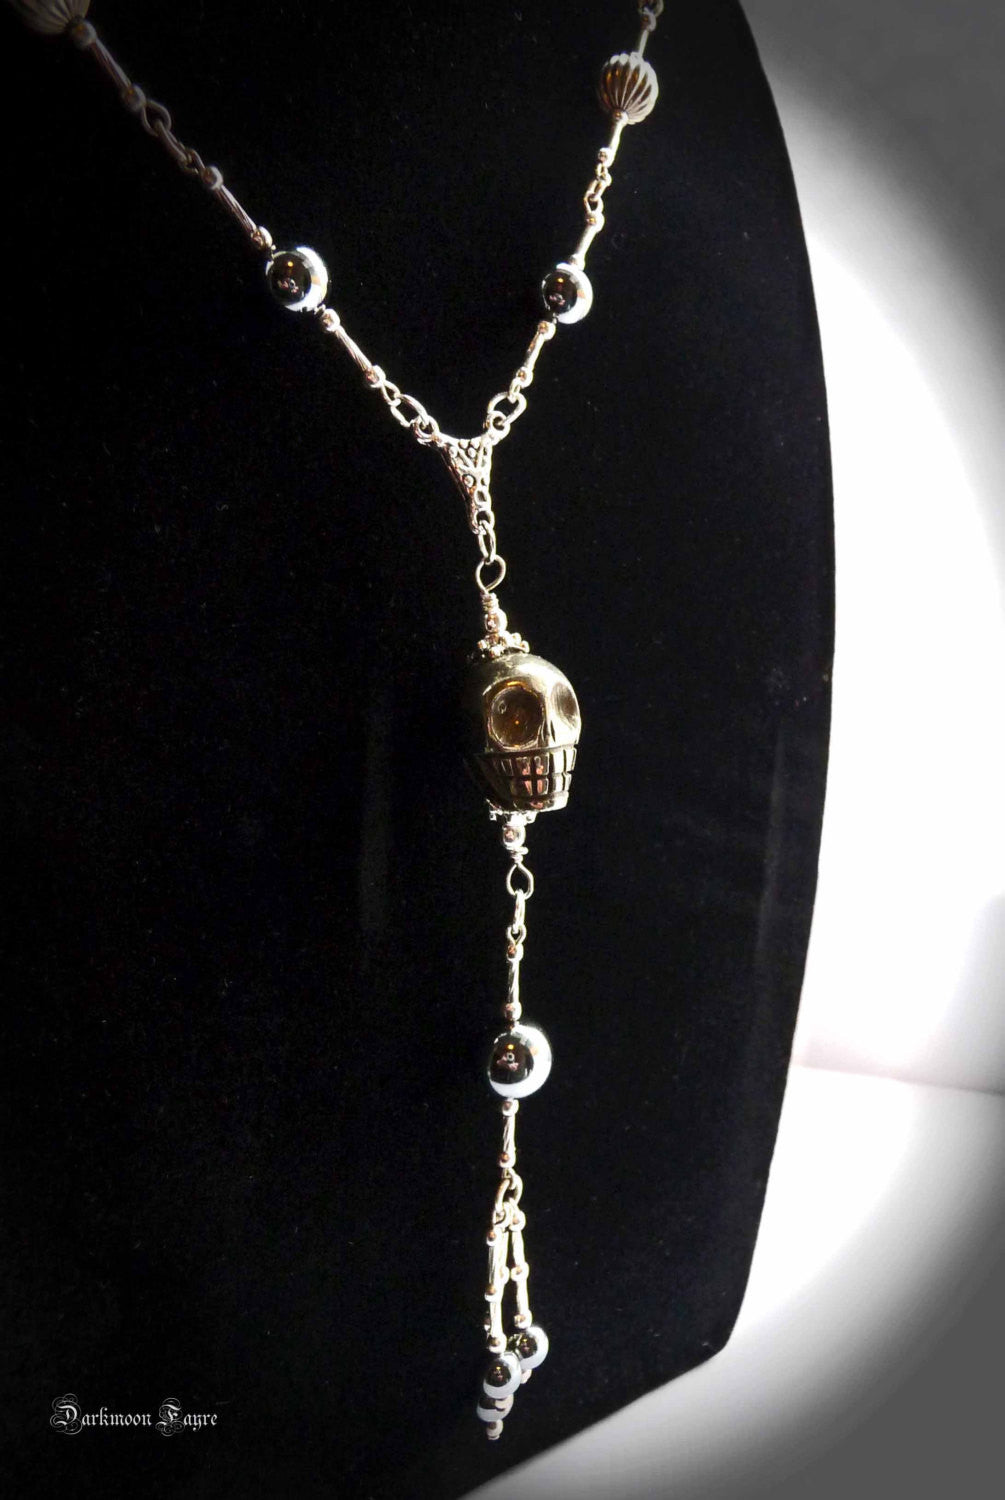 Day Of The Dead Necklace. Skull Rosary. Día de los Muertos. Hand Wired Silver Hematite Rosary Chain - Darkmoon Fayre